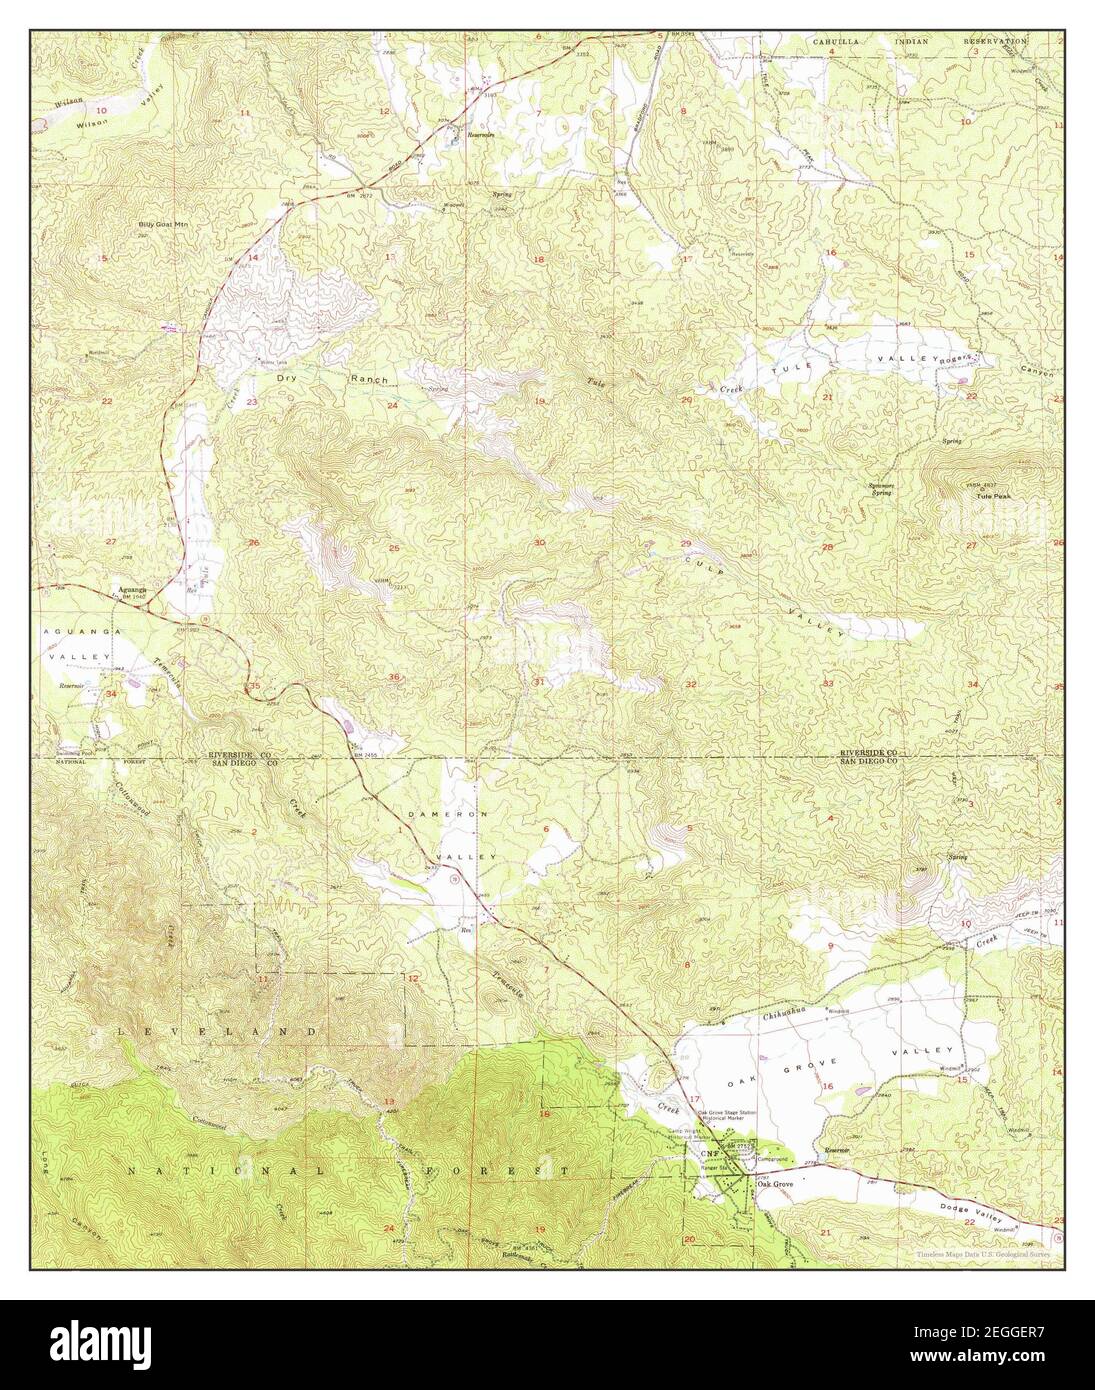 Aguanga, California, map 1954, 1:24000, United States of America by Timeless Maps, data U.S. Geological Survey Stock Photo